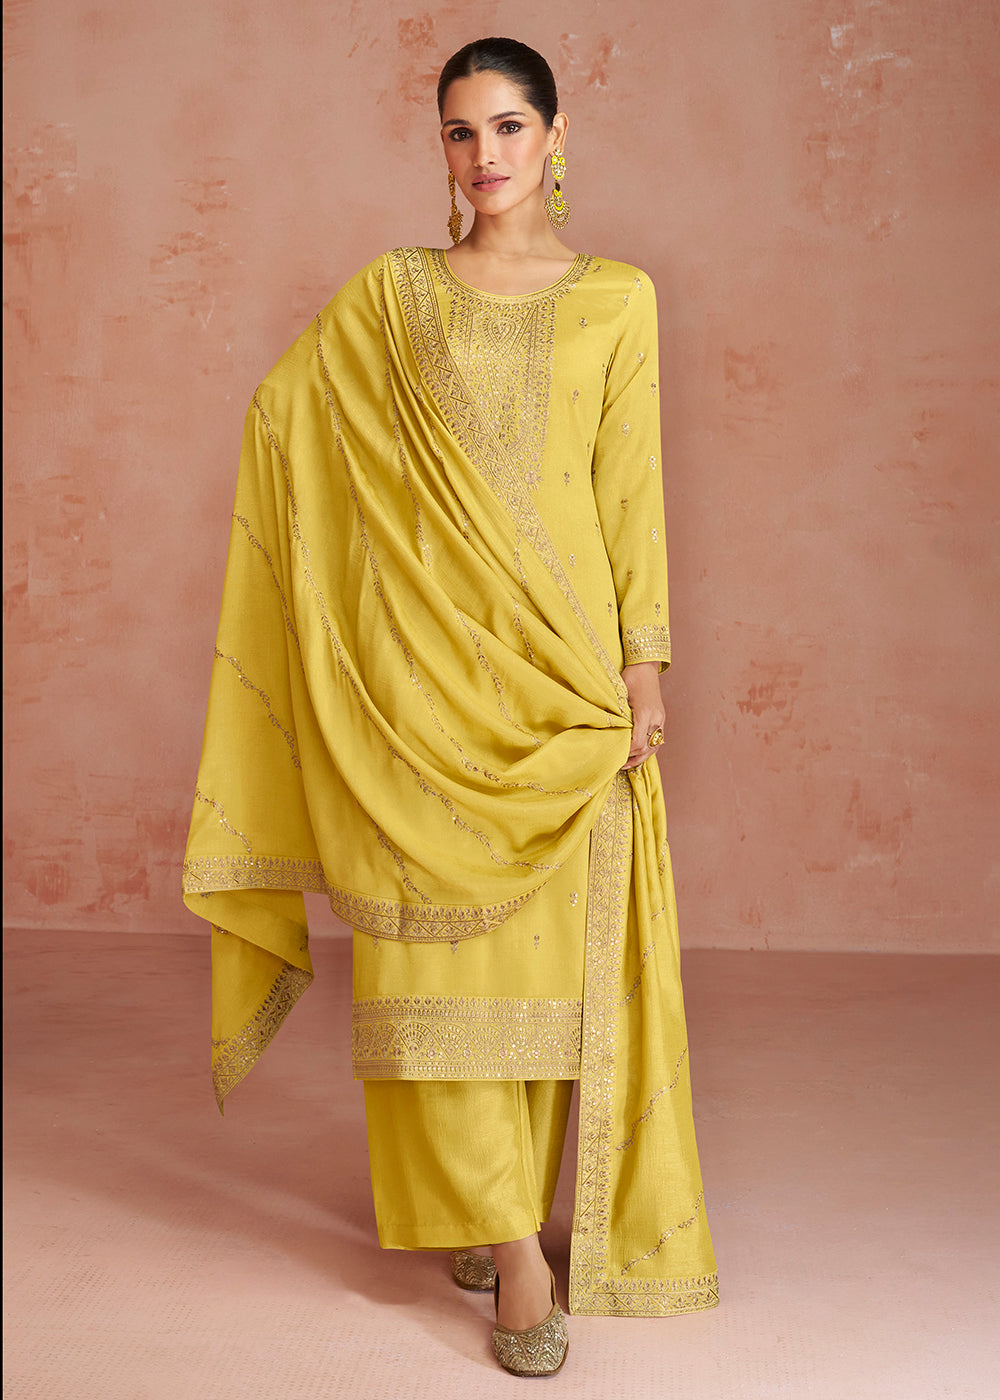 Buy Now Elegant Yellow Silk Embroidered Palazzo Salwar Kameez Online in USA, UK, Canada, Germany, Australia & Worldwide at Empress Clothing.